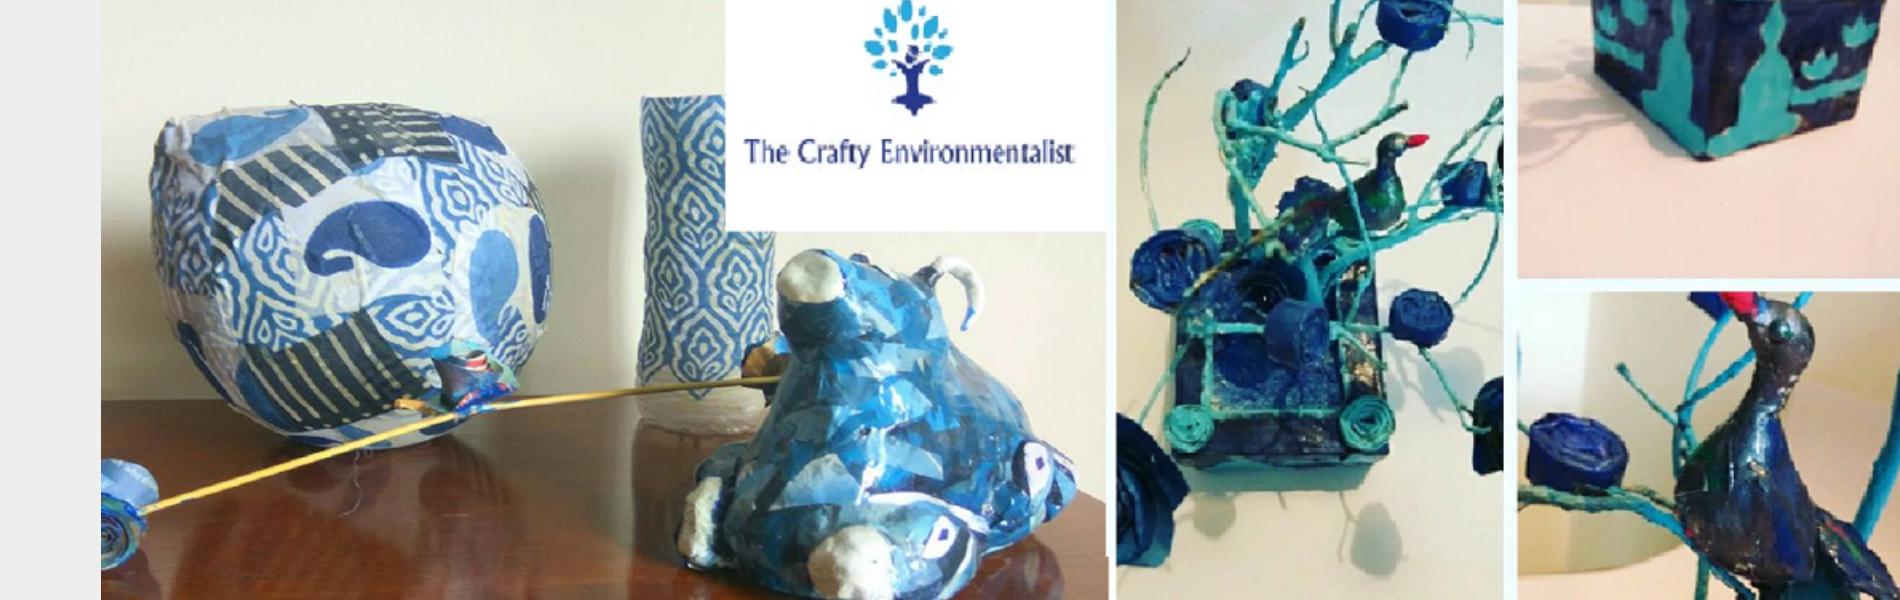 The Crafty Environmentalist